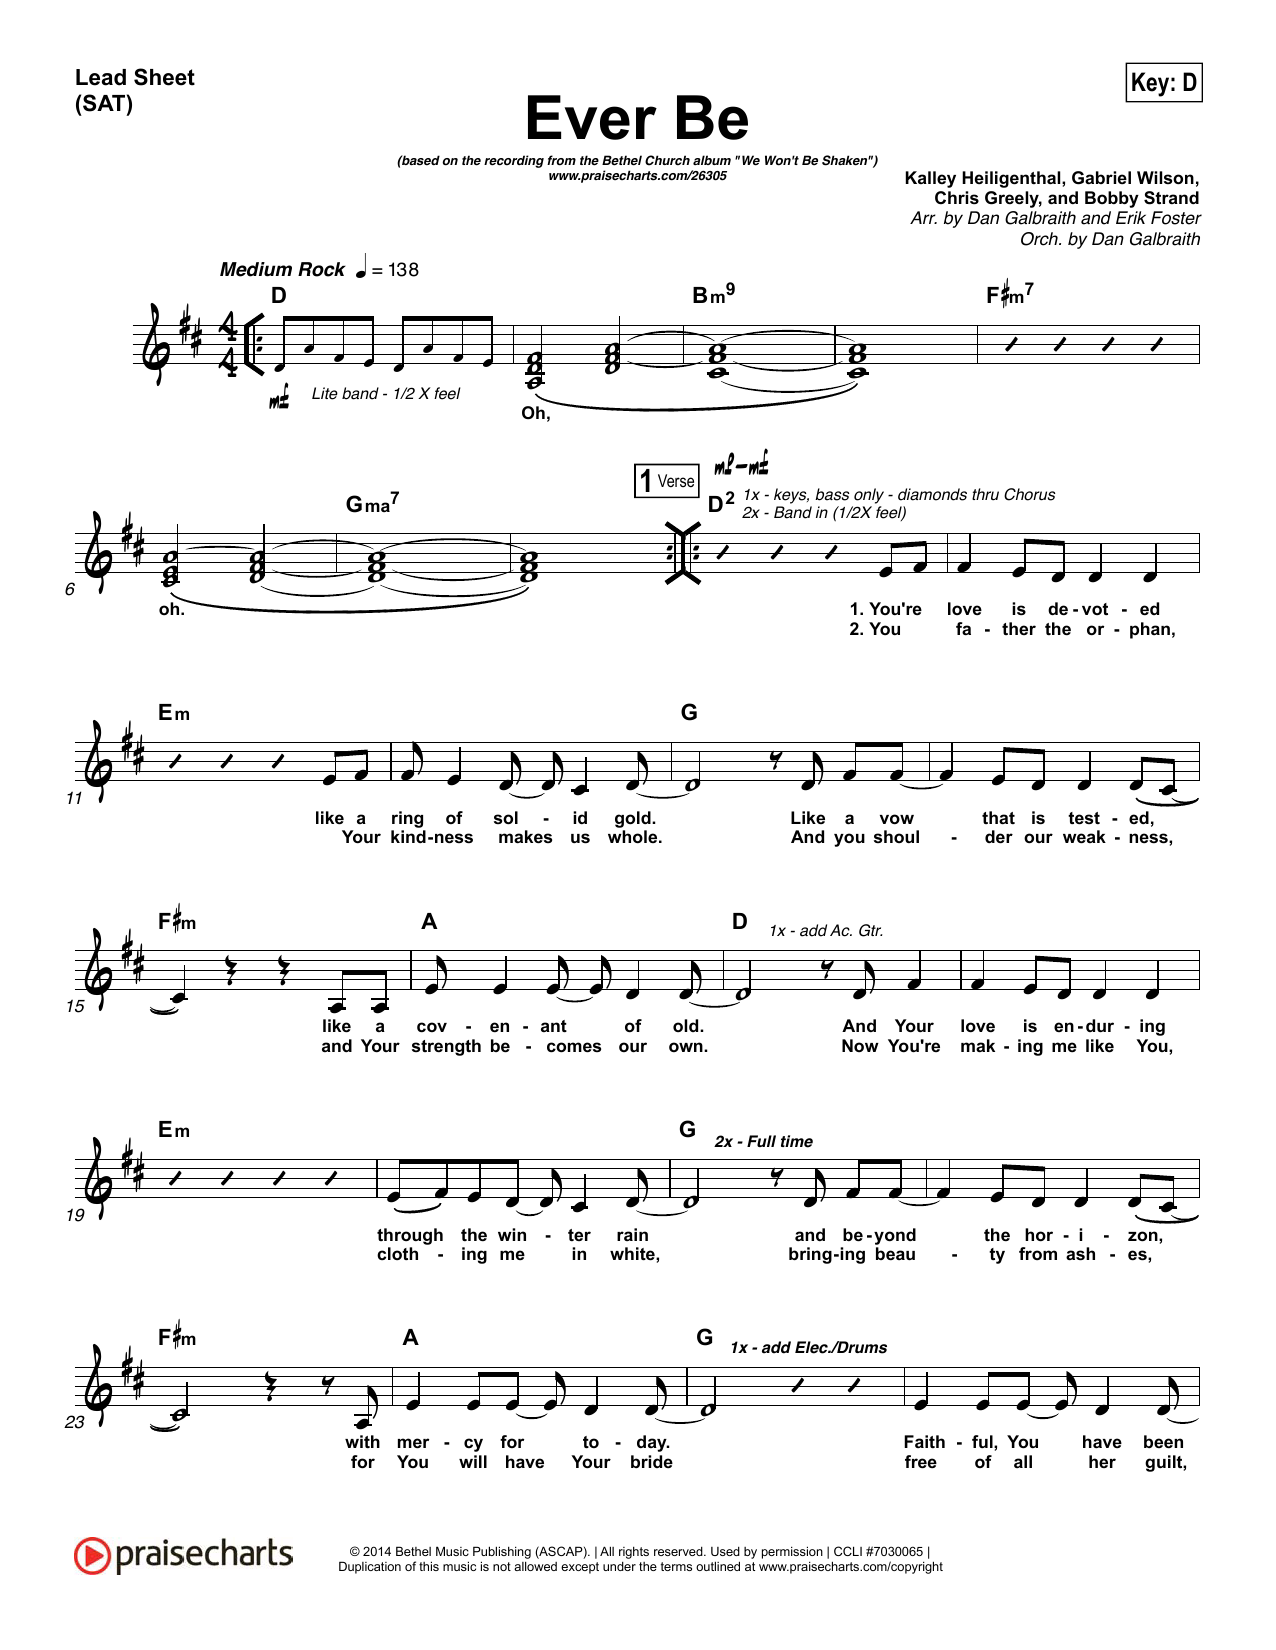 Dan Galbraith / Erik Foster Ever Be Sheet Music Notes & Chords for Lead Sheet / Fake Book - Download or Print PDF